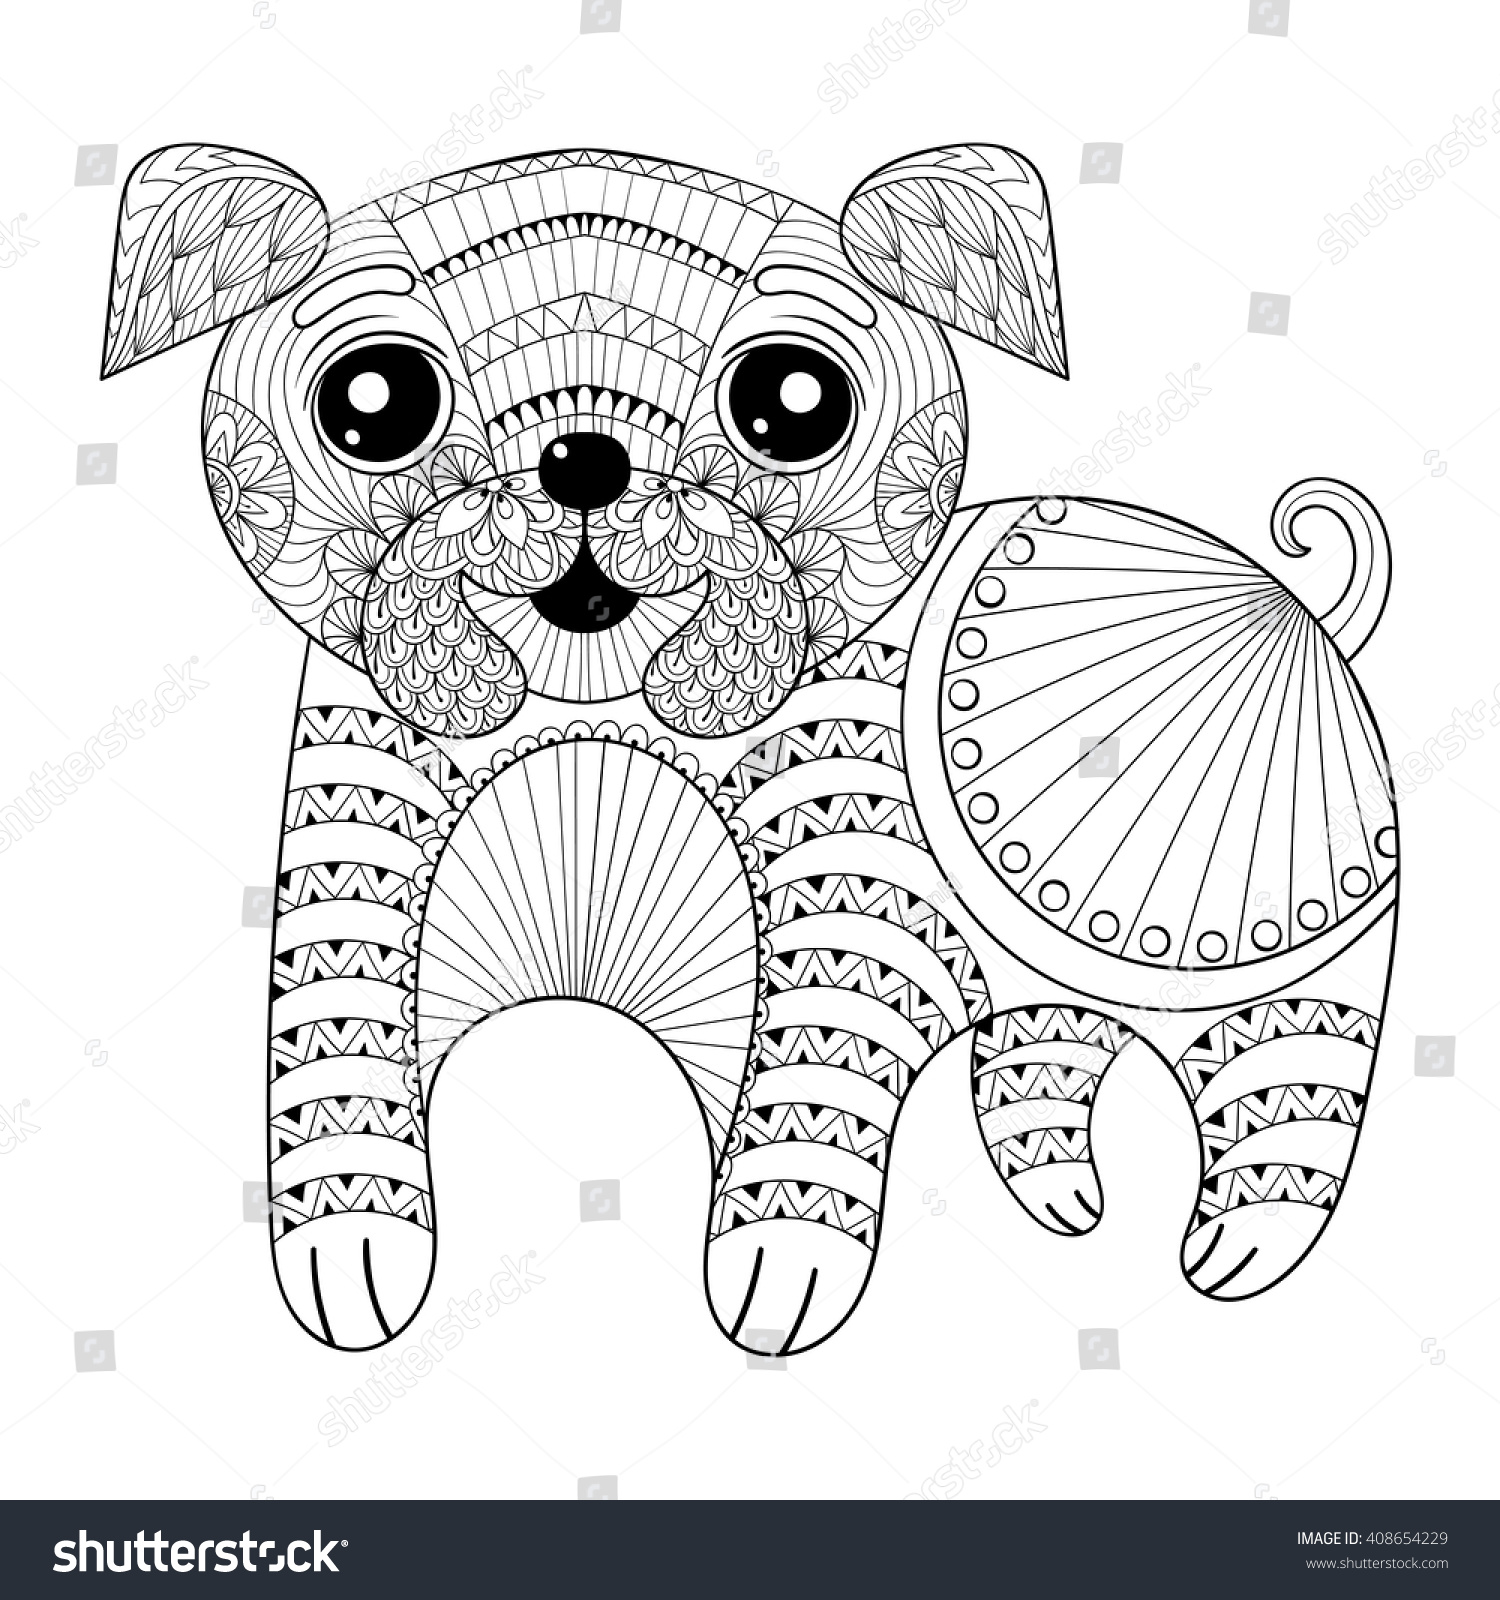 Zentangle Hand Drawing Dog Antistress Coloring Stock Vektorgrafik ...